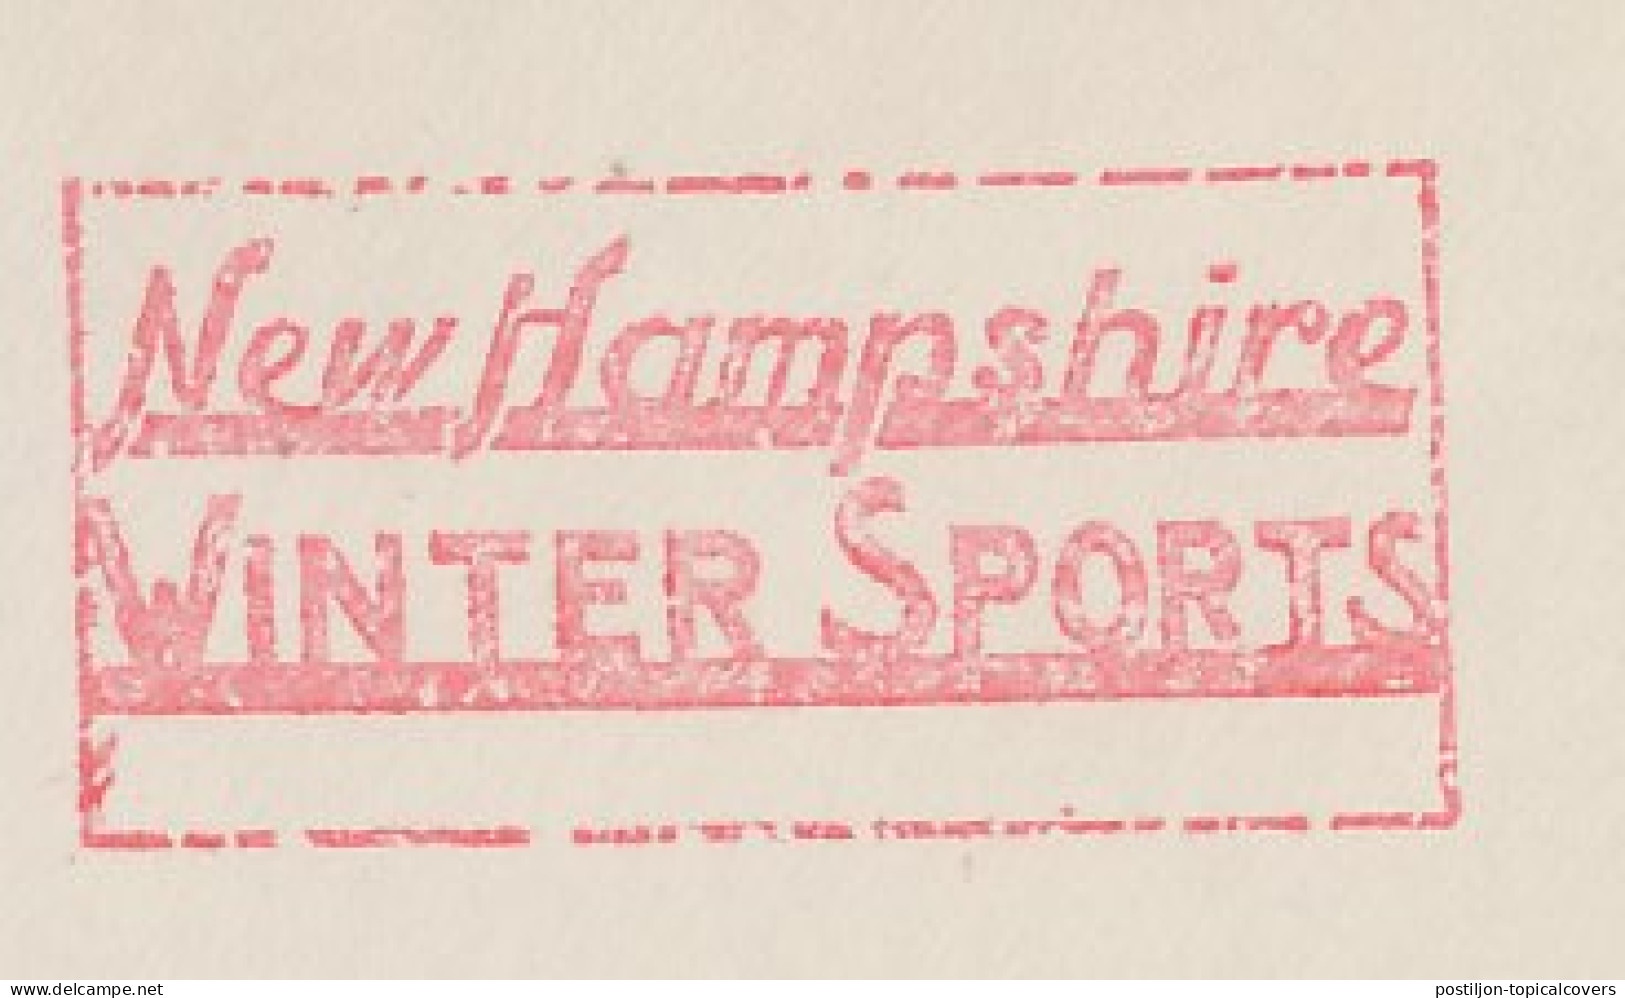 Meter Top Cut USA 1937 Winter Sports - New Hampshire - Inverno